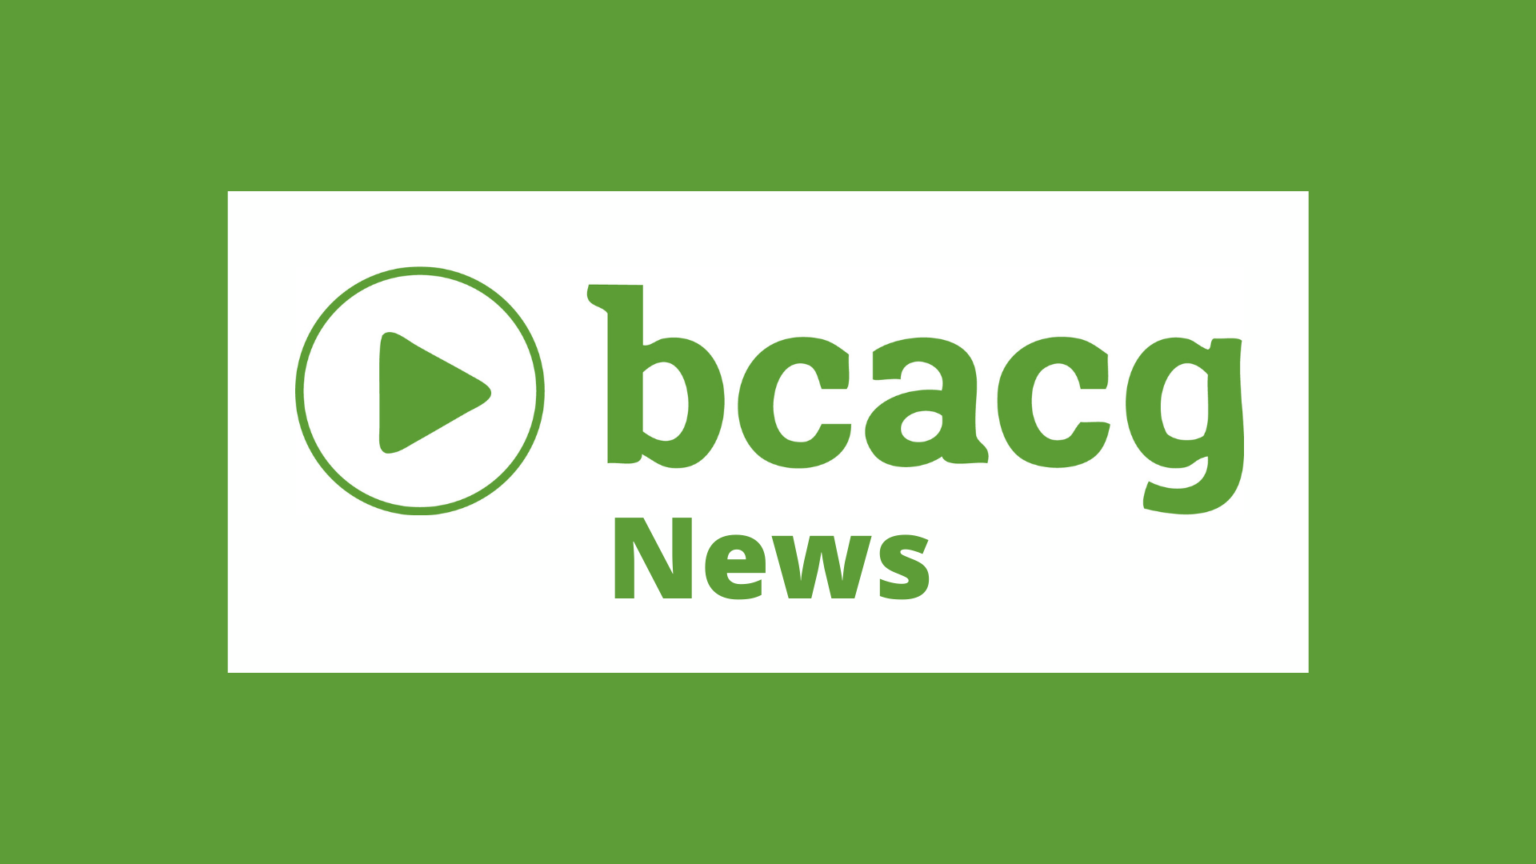 NEW! 2022 GAMING GRANT PROGRAM GUIDELINES | BCACG